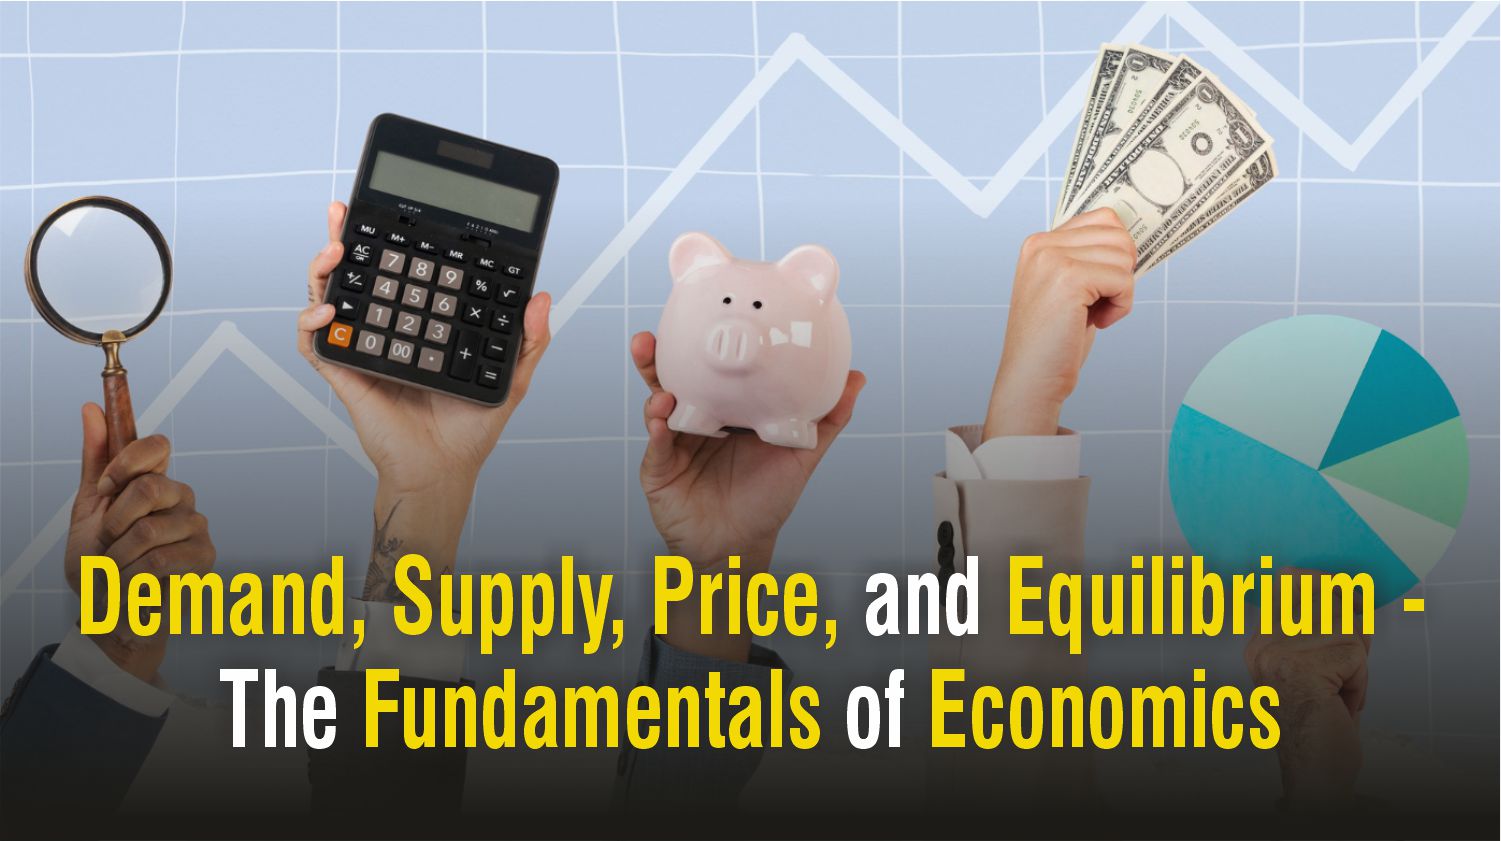 Demand, Supply, Price, and Equilibrium - The Fundamentals of Economics